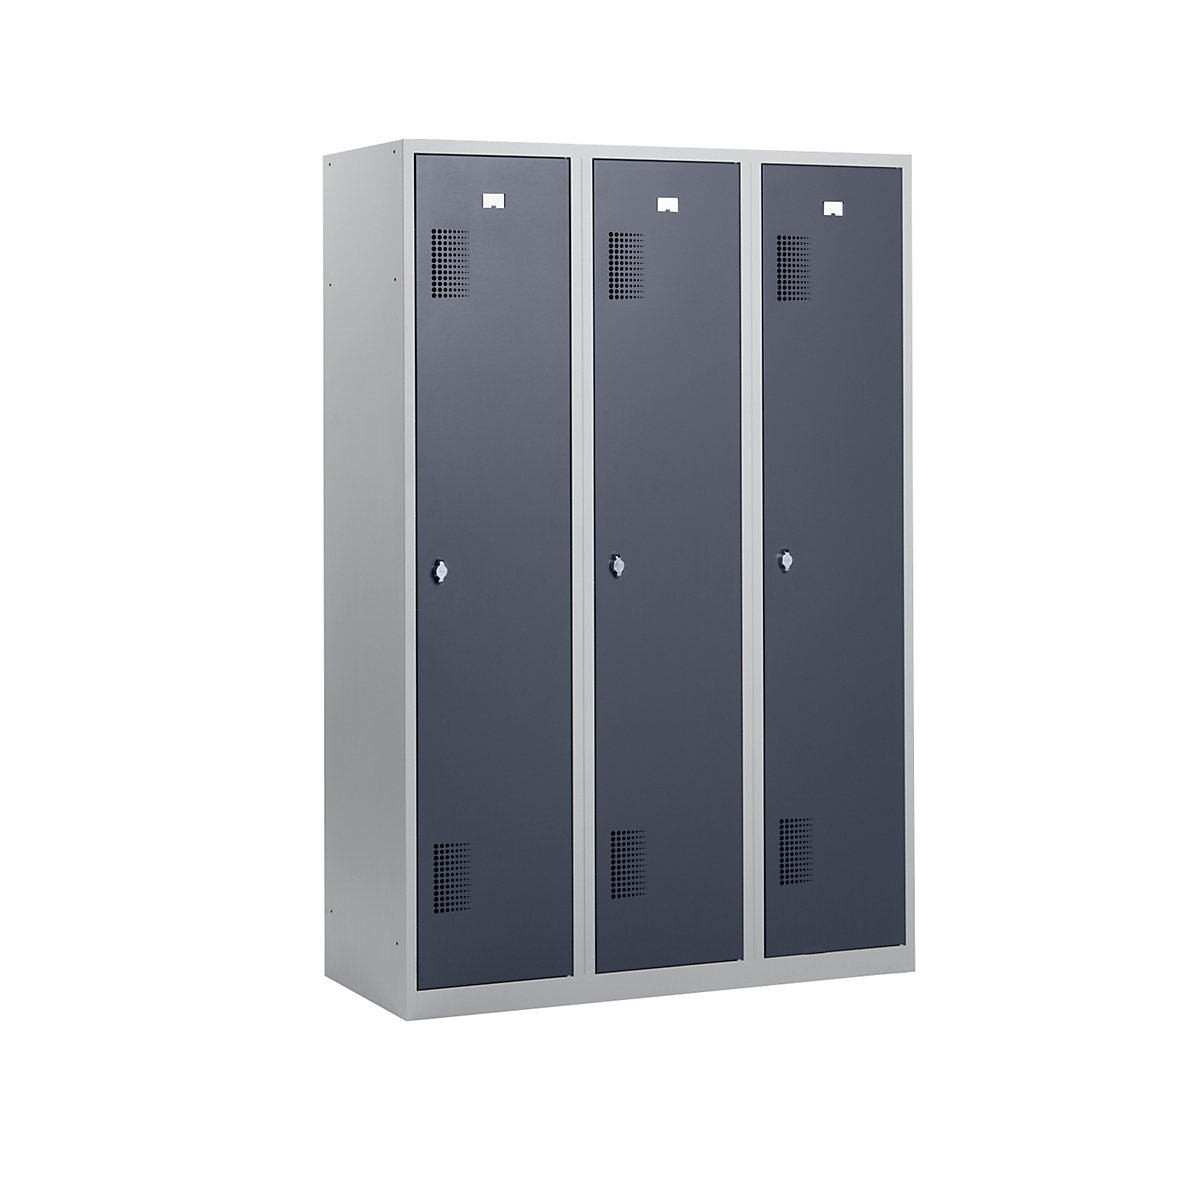 AMSTERDAM cloakroom locker – eurokraft basic, height 1800 mm, width 1200 mm, 3 x 398 mm wide compartments, with fittings for padlock, light grey body / basalt grey doors-3